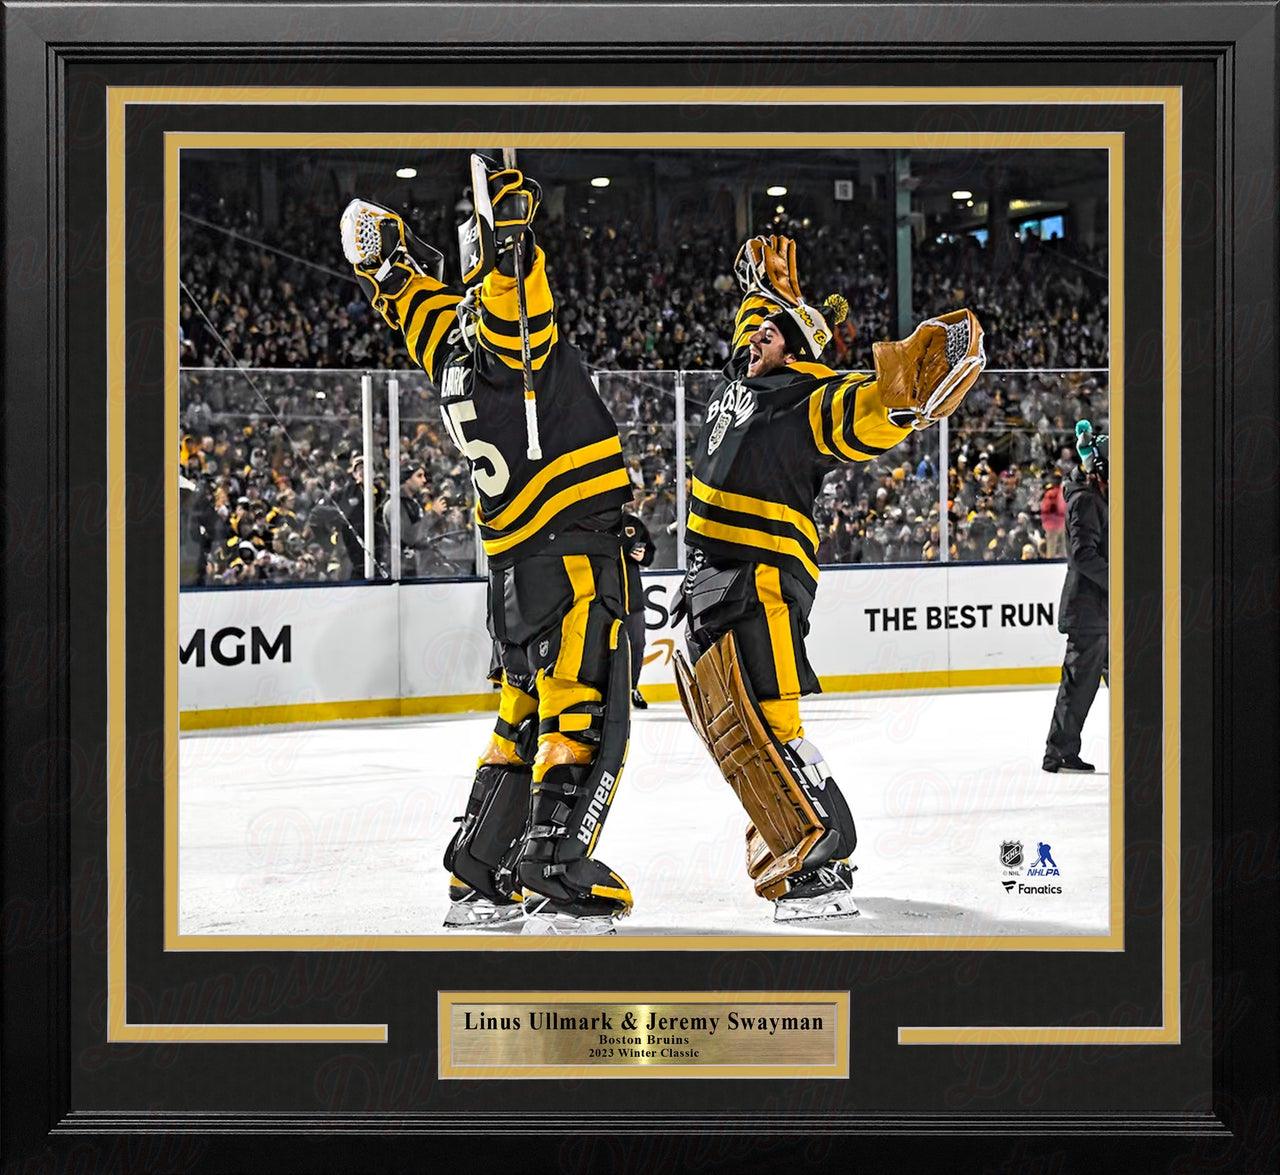 Linus Ullmark & Jeremy Swayman 2023 Winter Classic Boston Bruins Framed Hockey Photo - Dynasty Sports & Framing 